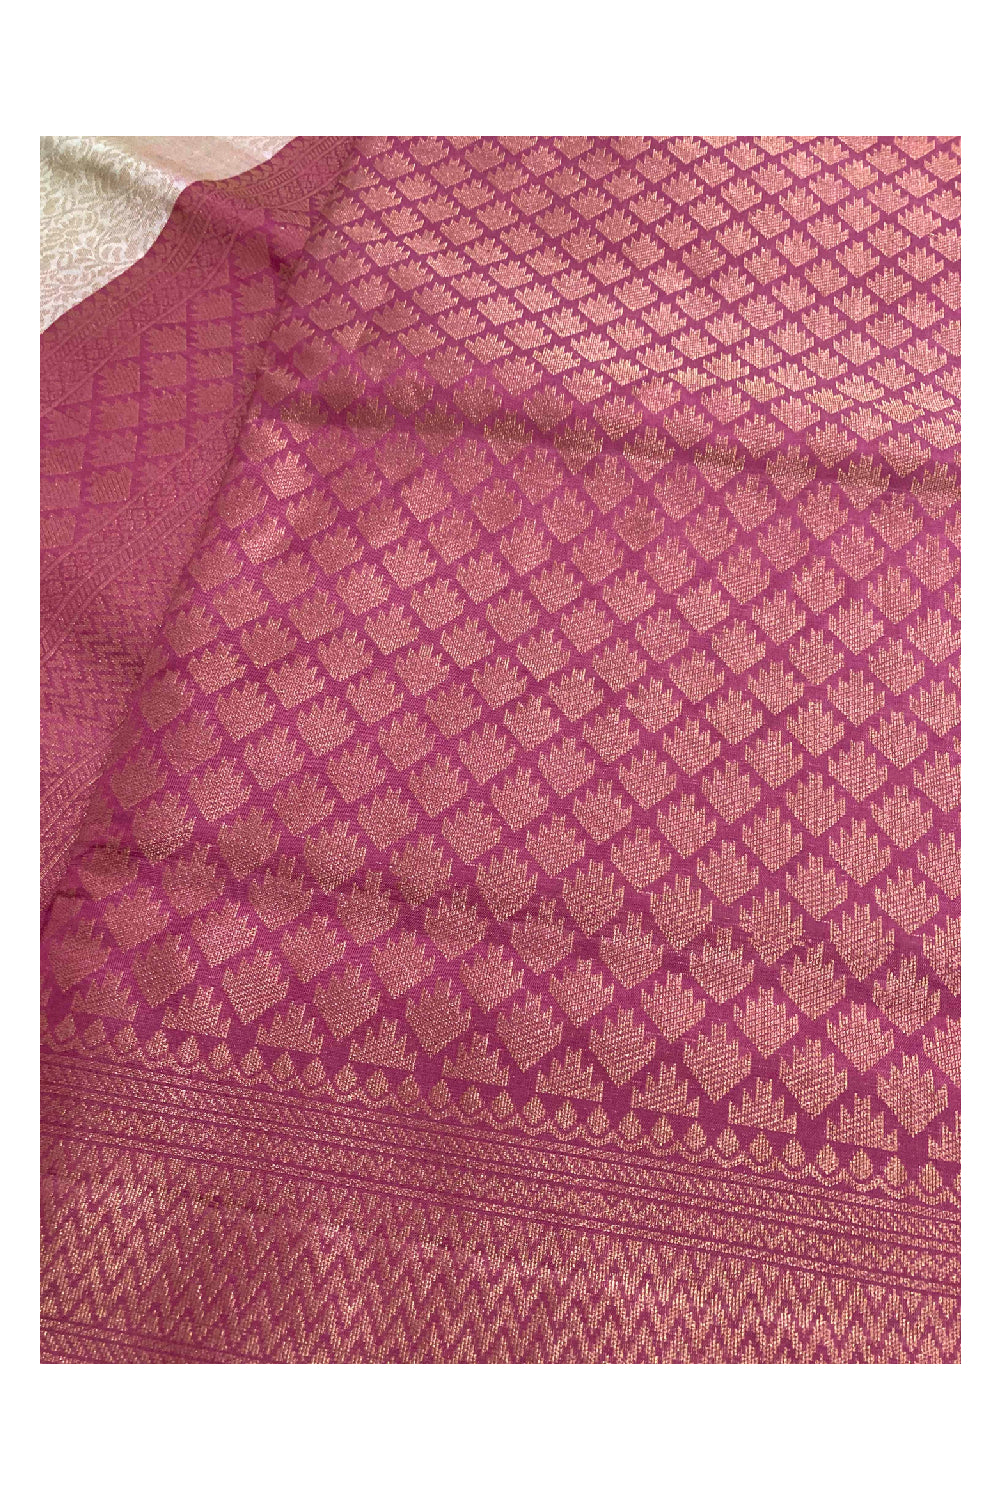 Southloom Handloom Pure Silk Kanchipuram Saree in Cream and Magenta Motifs